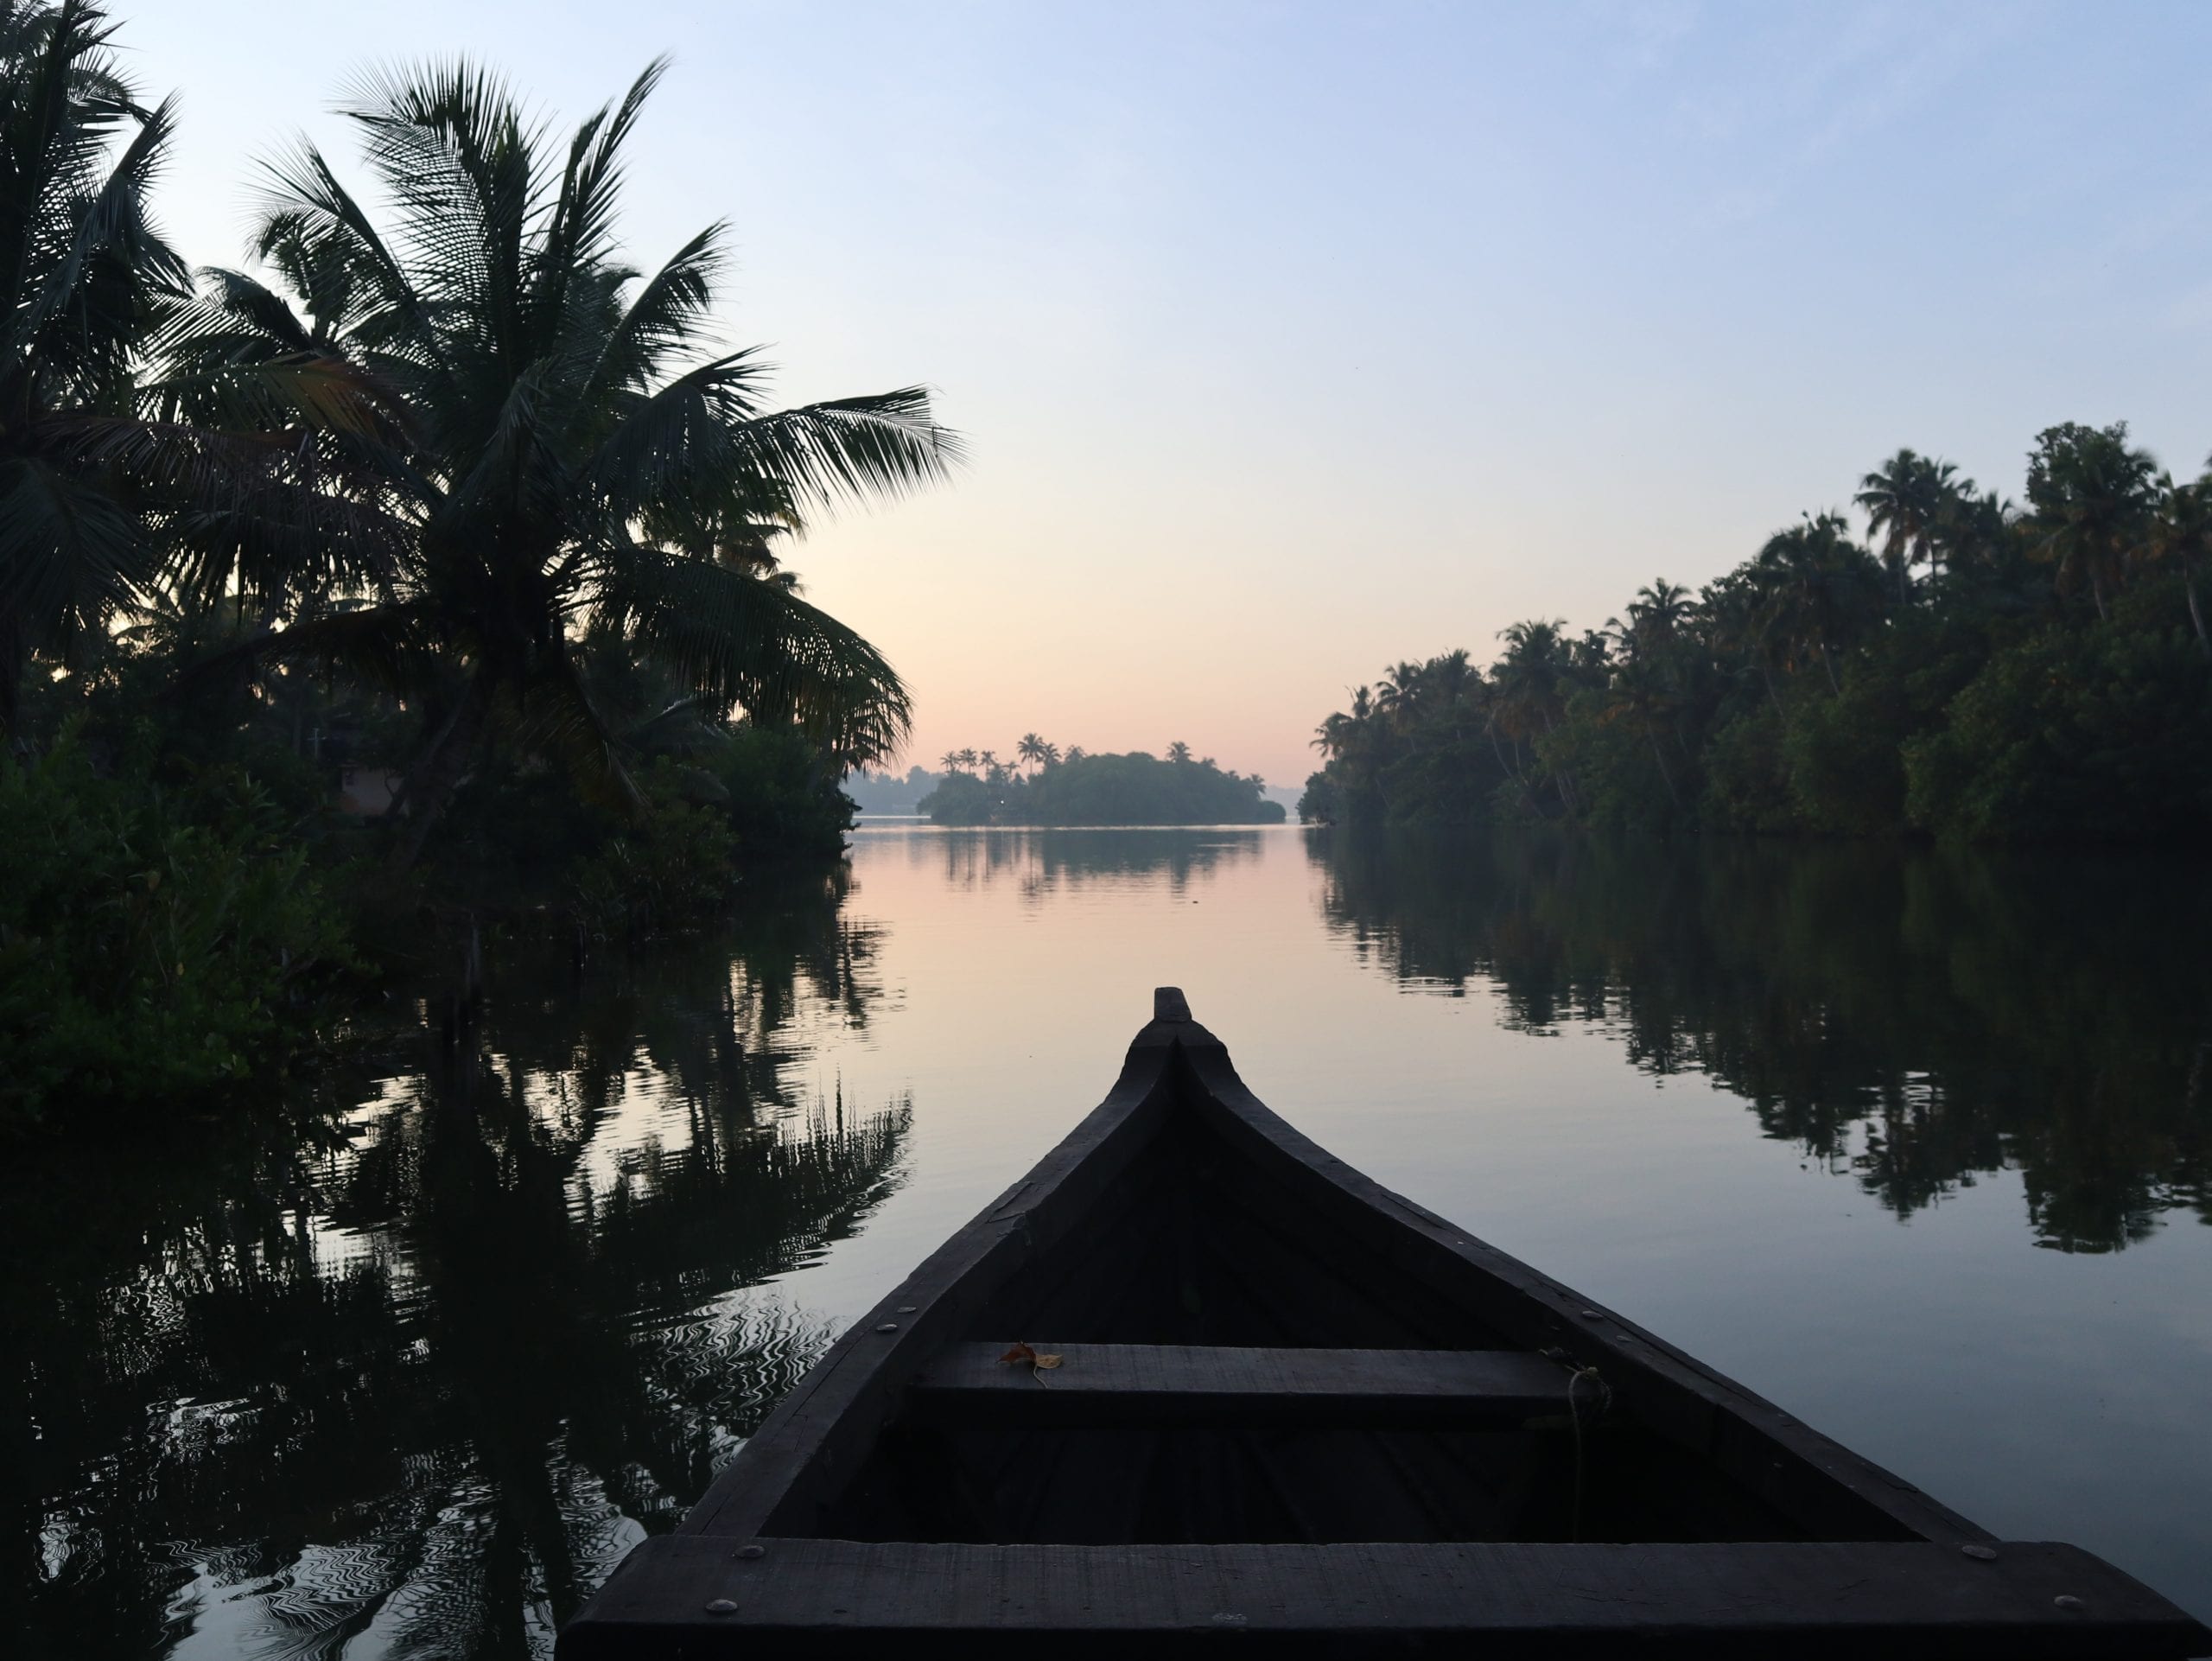 travel in kerala brown wooden boat on lake during daytime